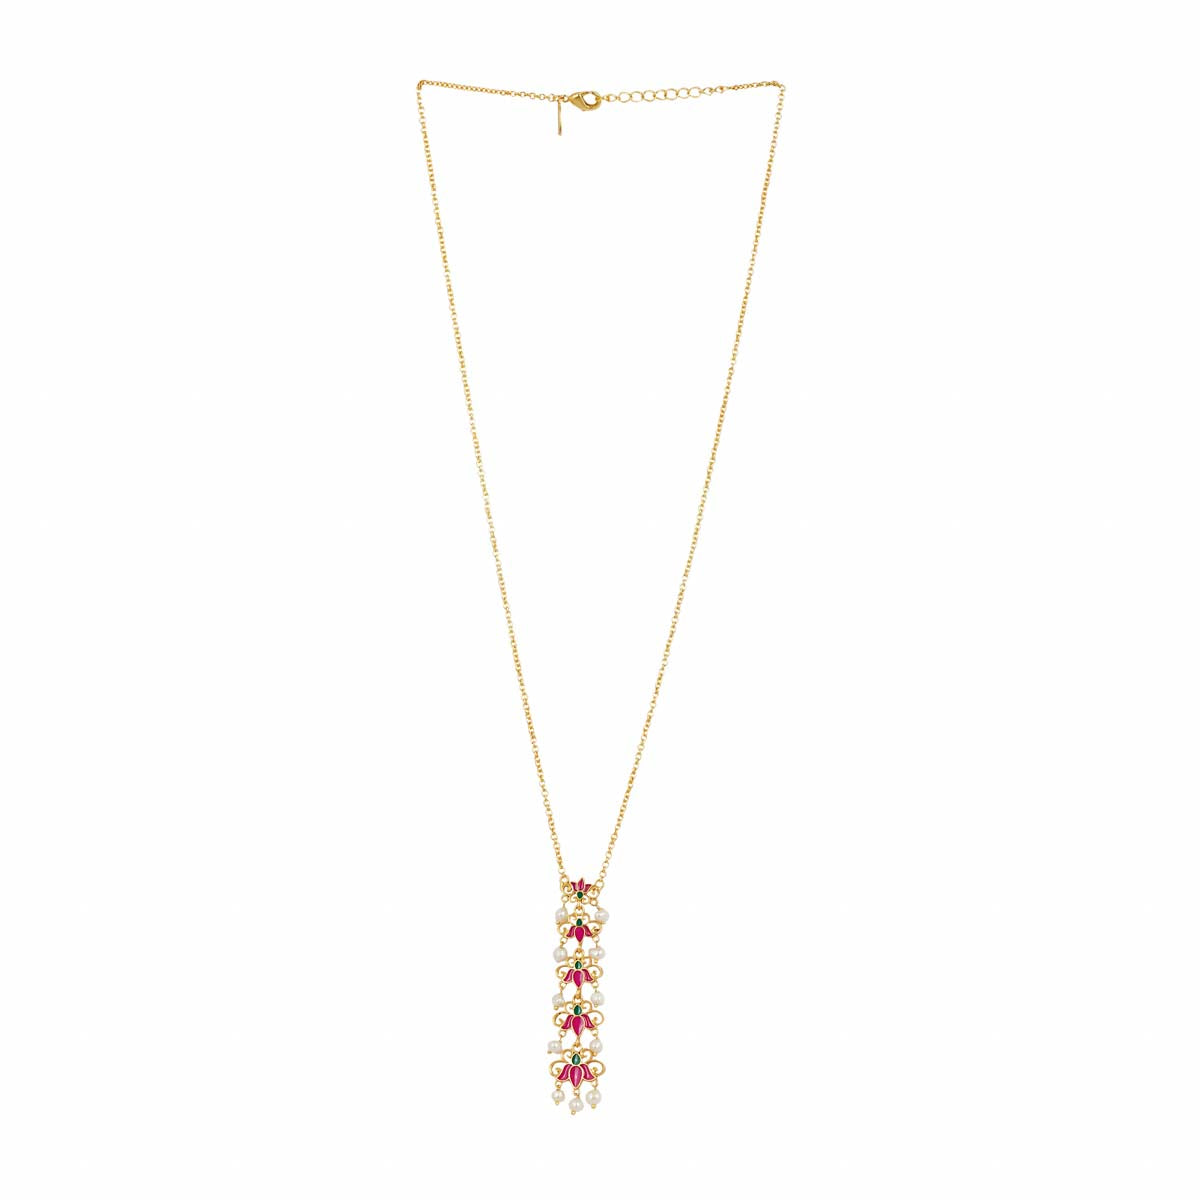 Lotus Garden Pendant Necklace in Pink Enamel